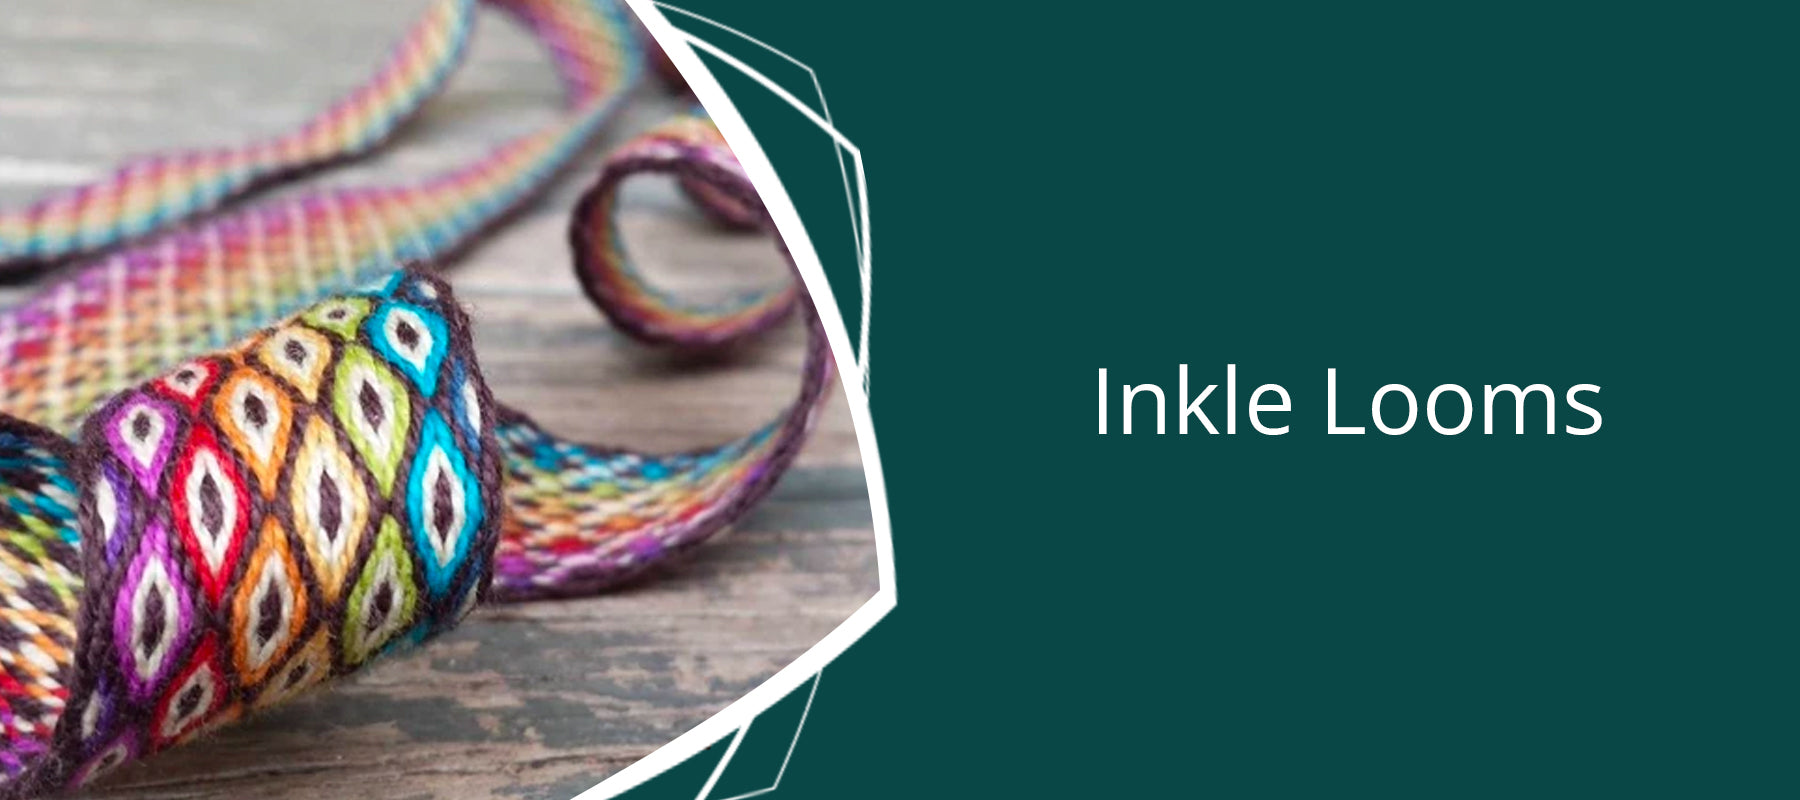 Buy inkle looms online - Thread Collective Australia 